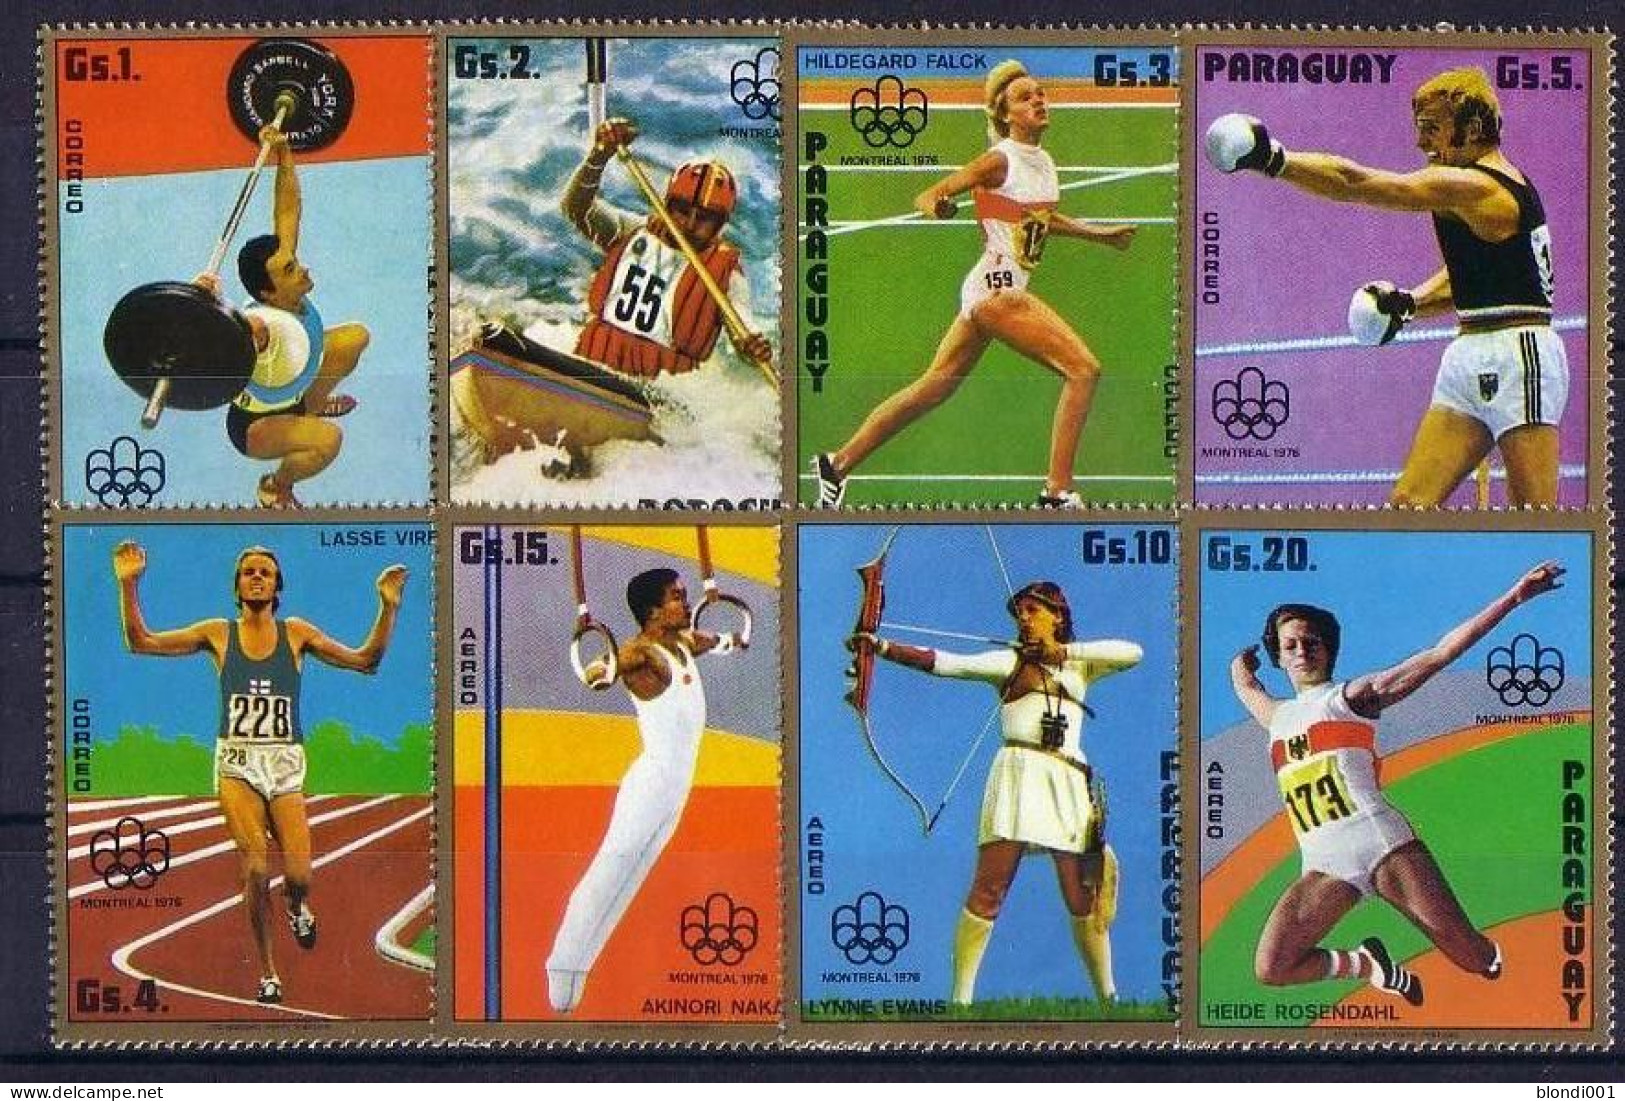 Olympics 1976 - Archery - PARAGUAY - Set MNH - Estate 1976: Montreal